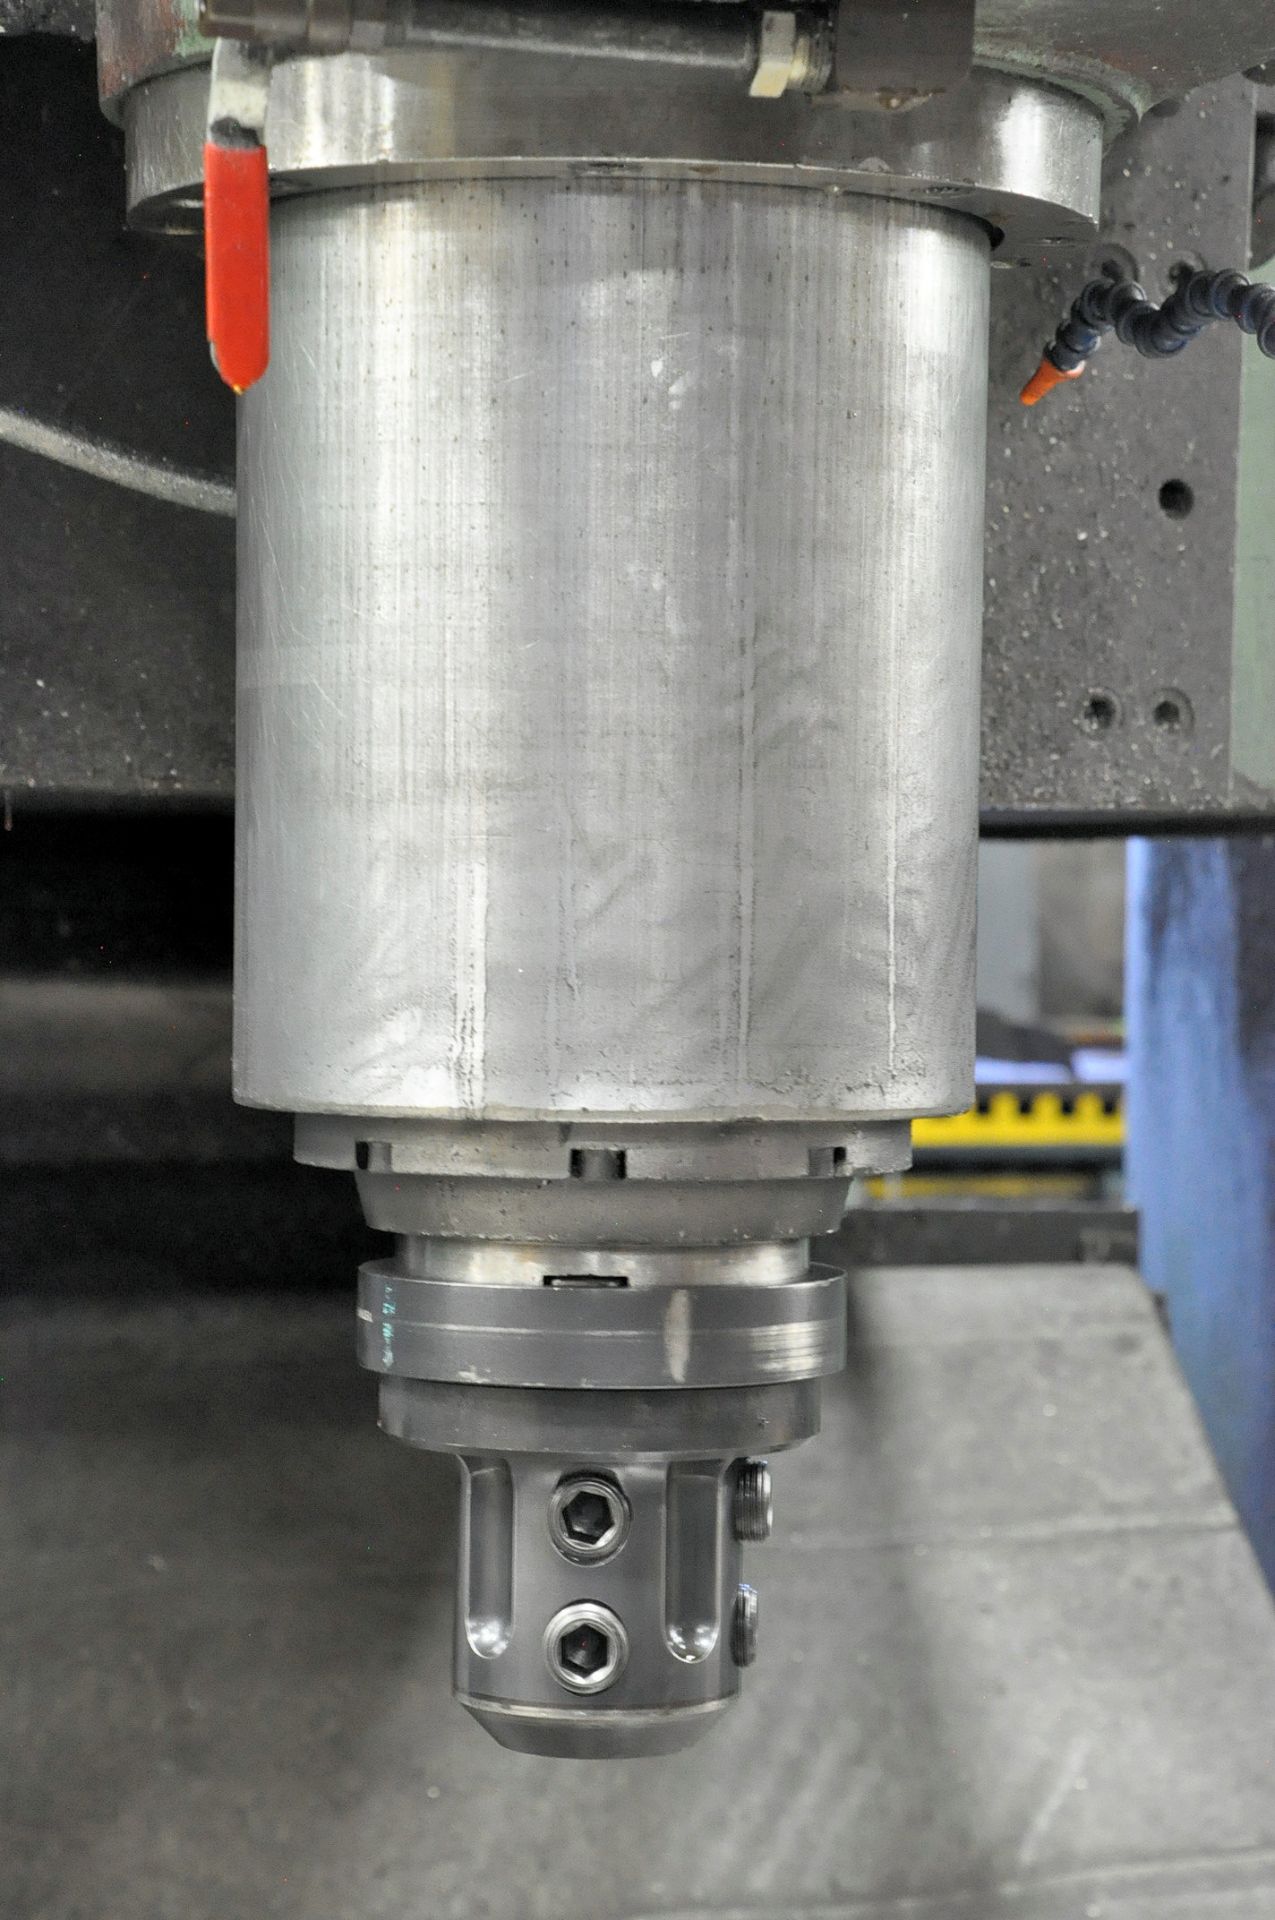 Pratt & Whitney Model Wolverine Master-Slave, CNC Vertical Milling Machine, S/n 170-397, 117" x - Image 4 of 10